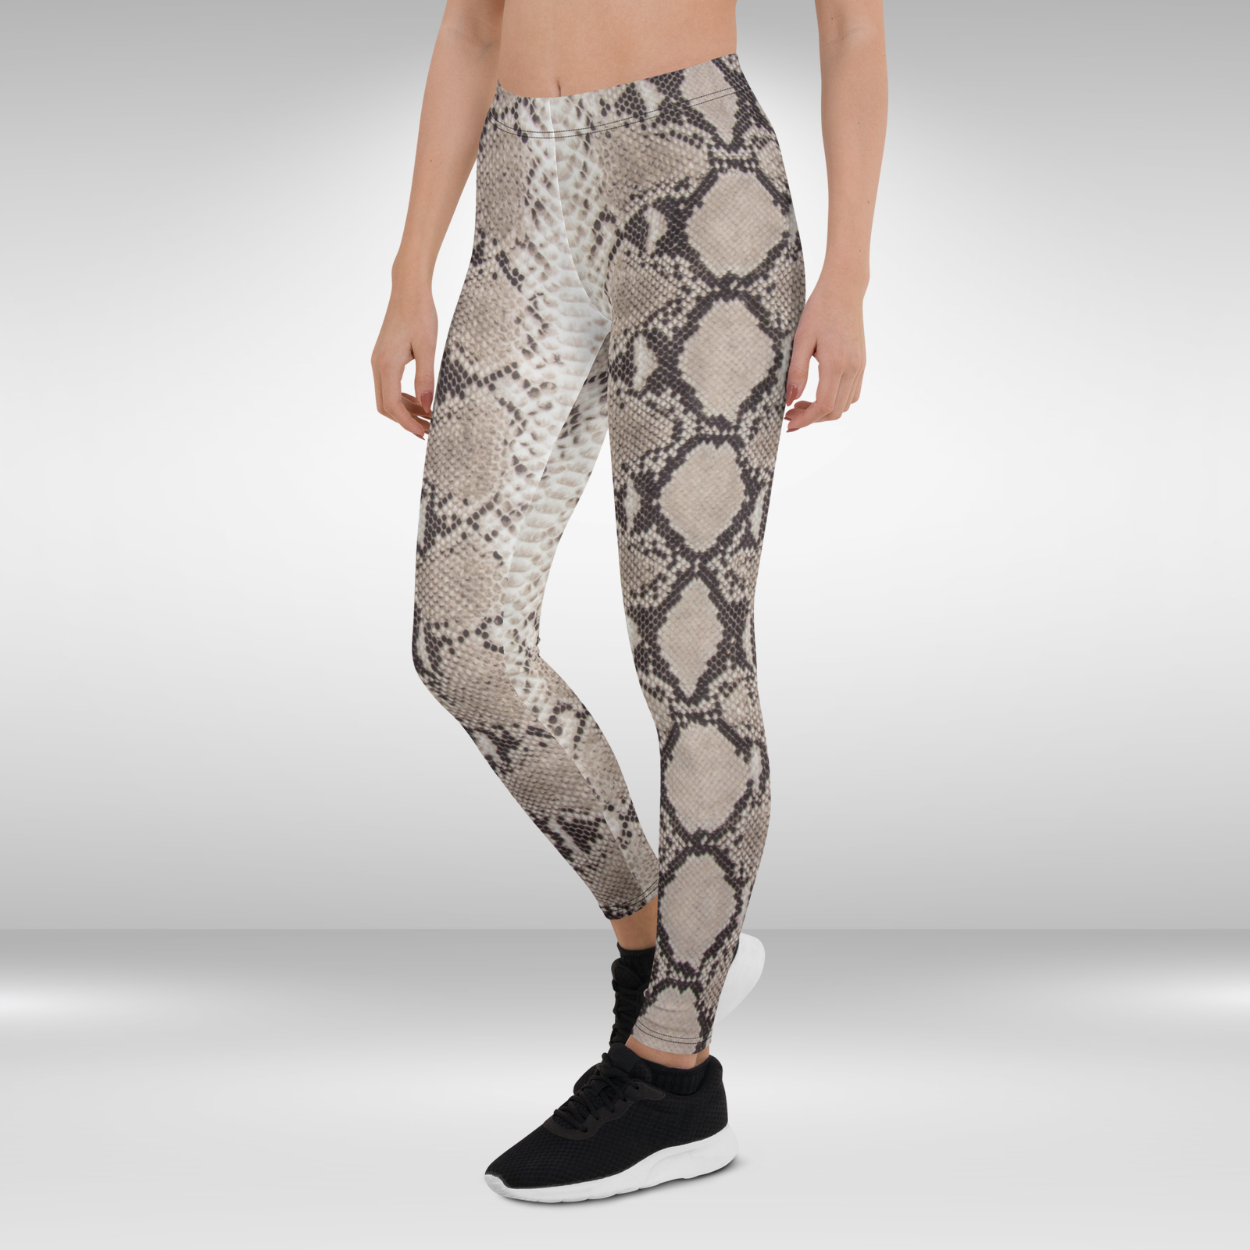 Women Gym Legging - Snake Skin Print